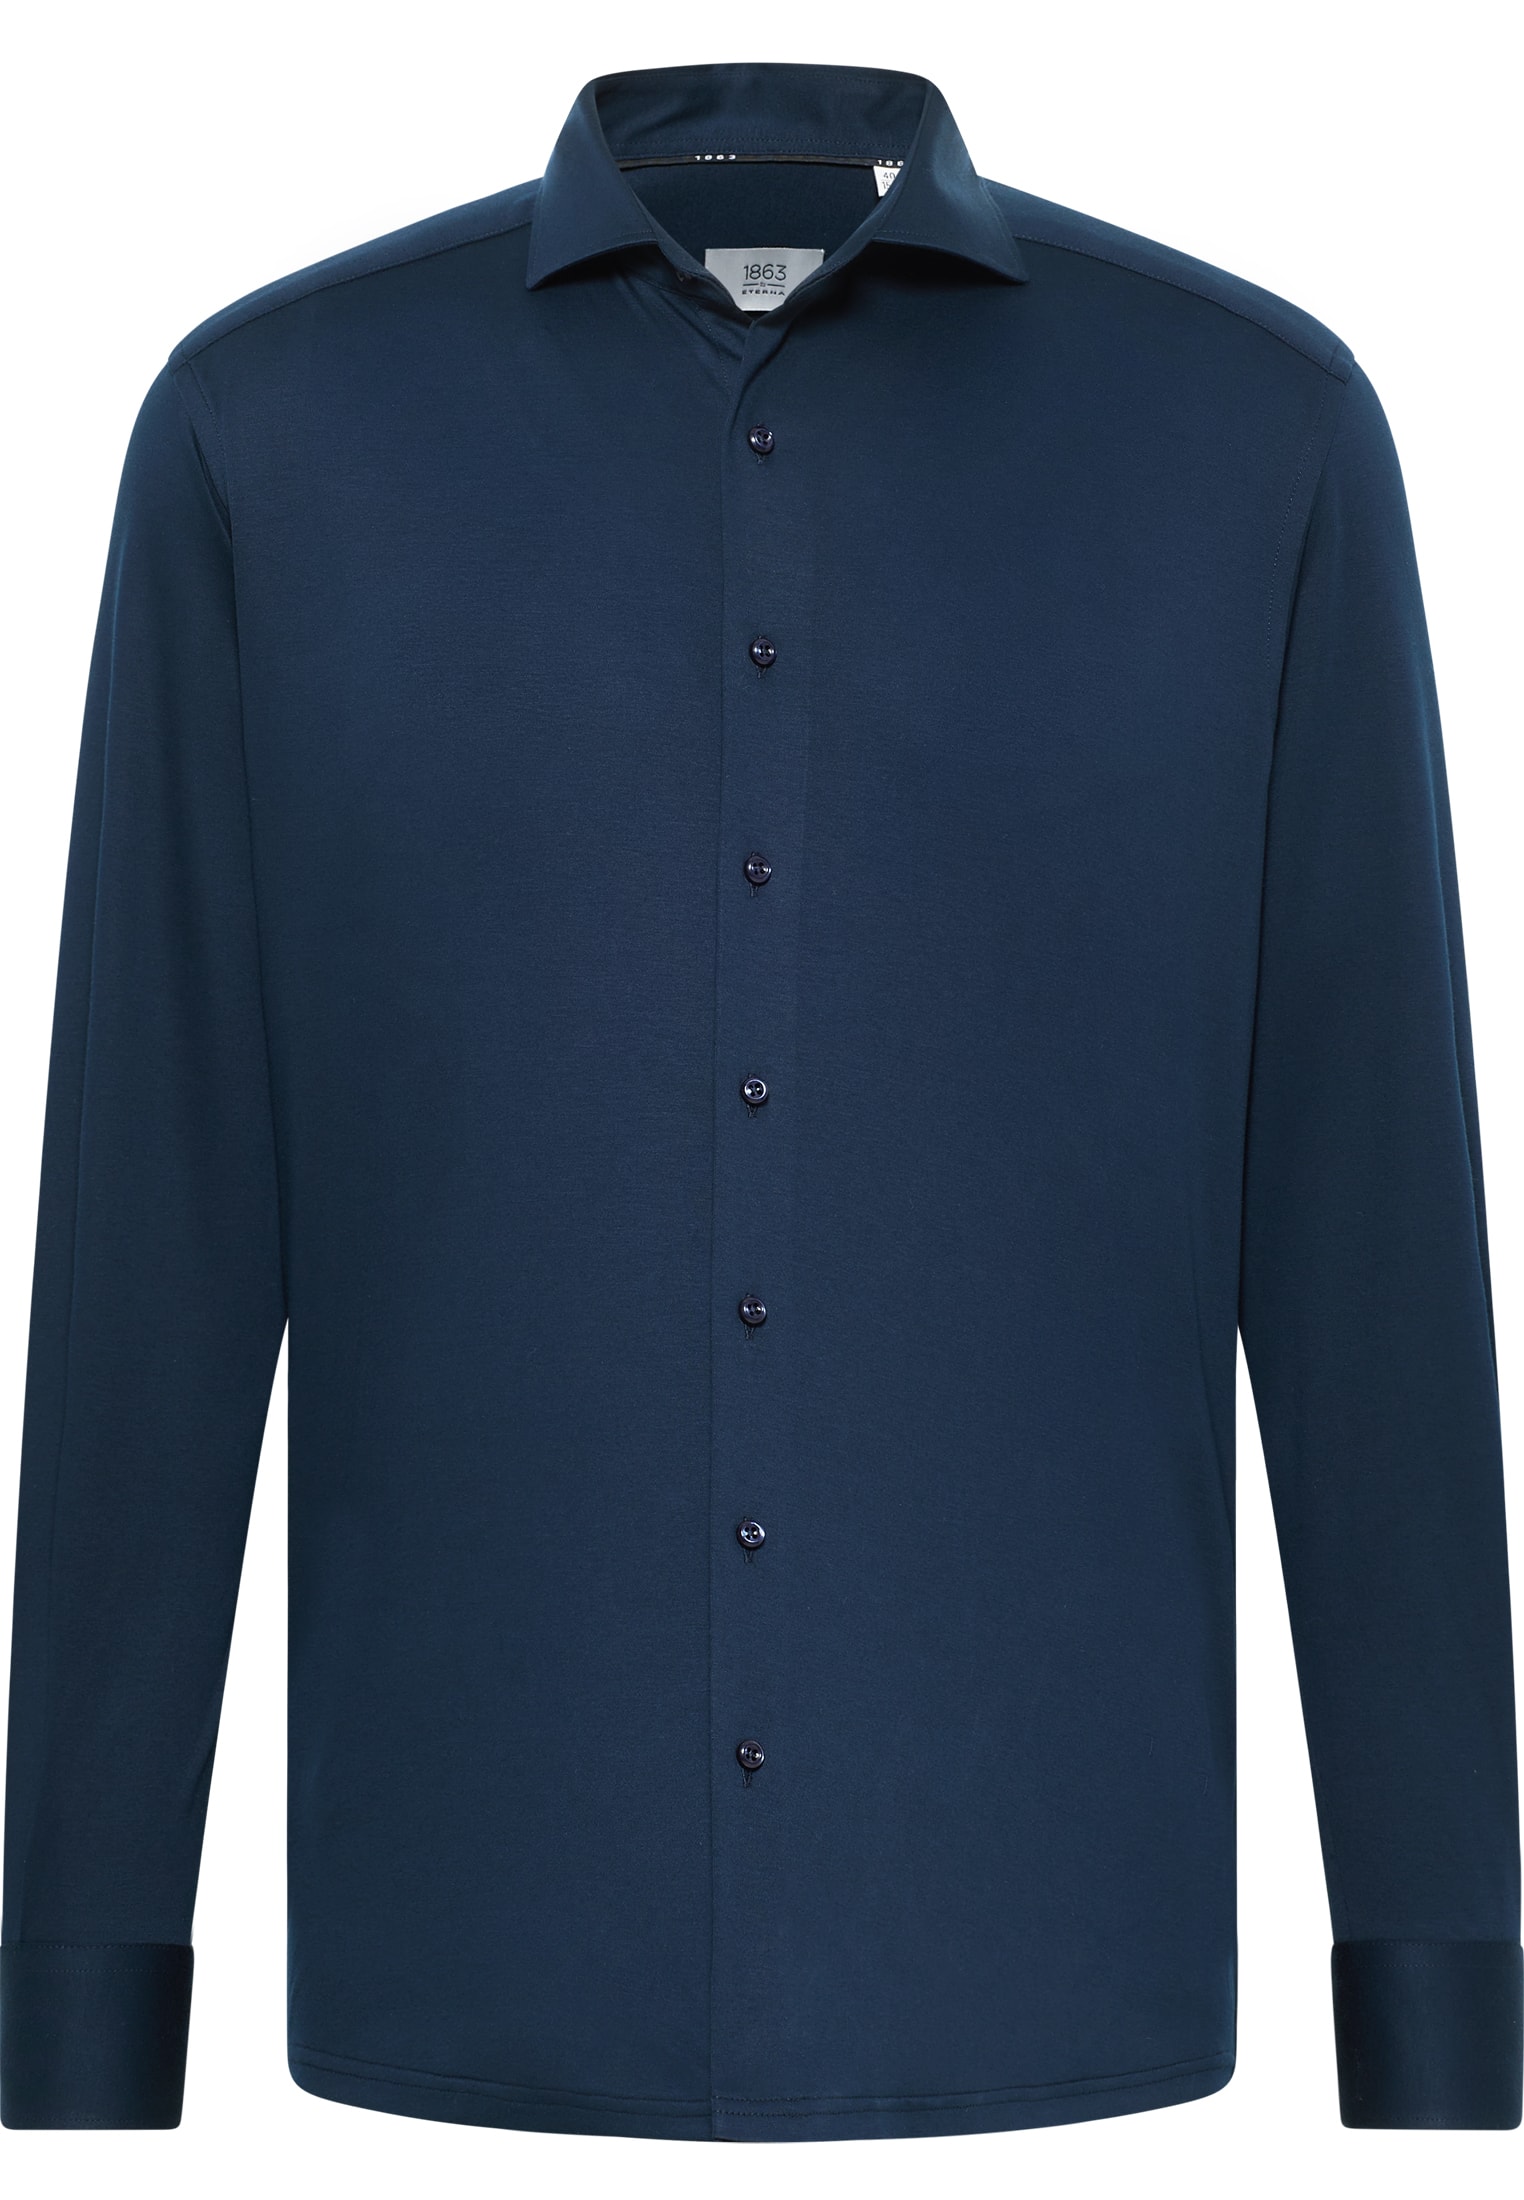 COMFORT FIT Jersey Shirt in dunkelblau | dunkelblau | unifarben Langarm | | 46 1SH00376-01-81-46-1/1